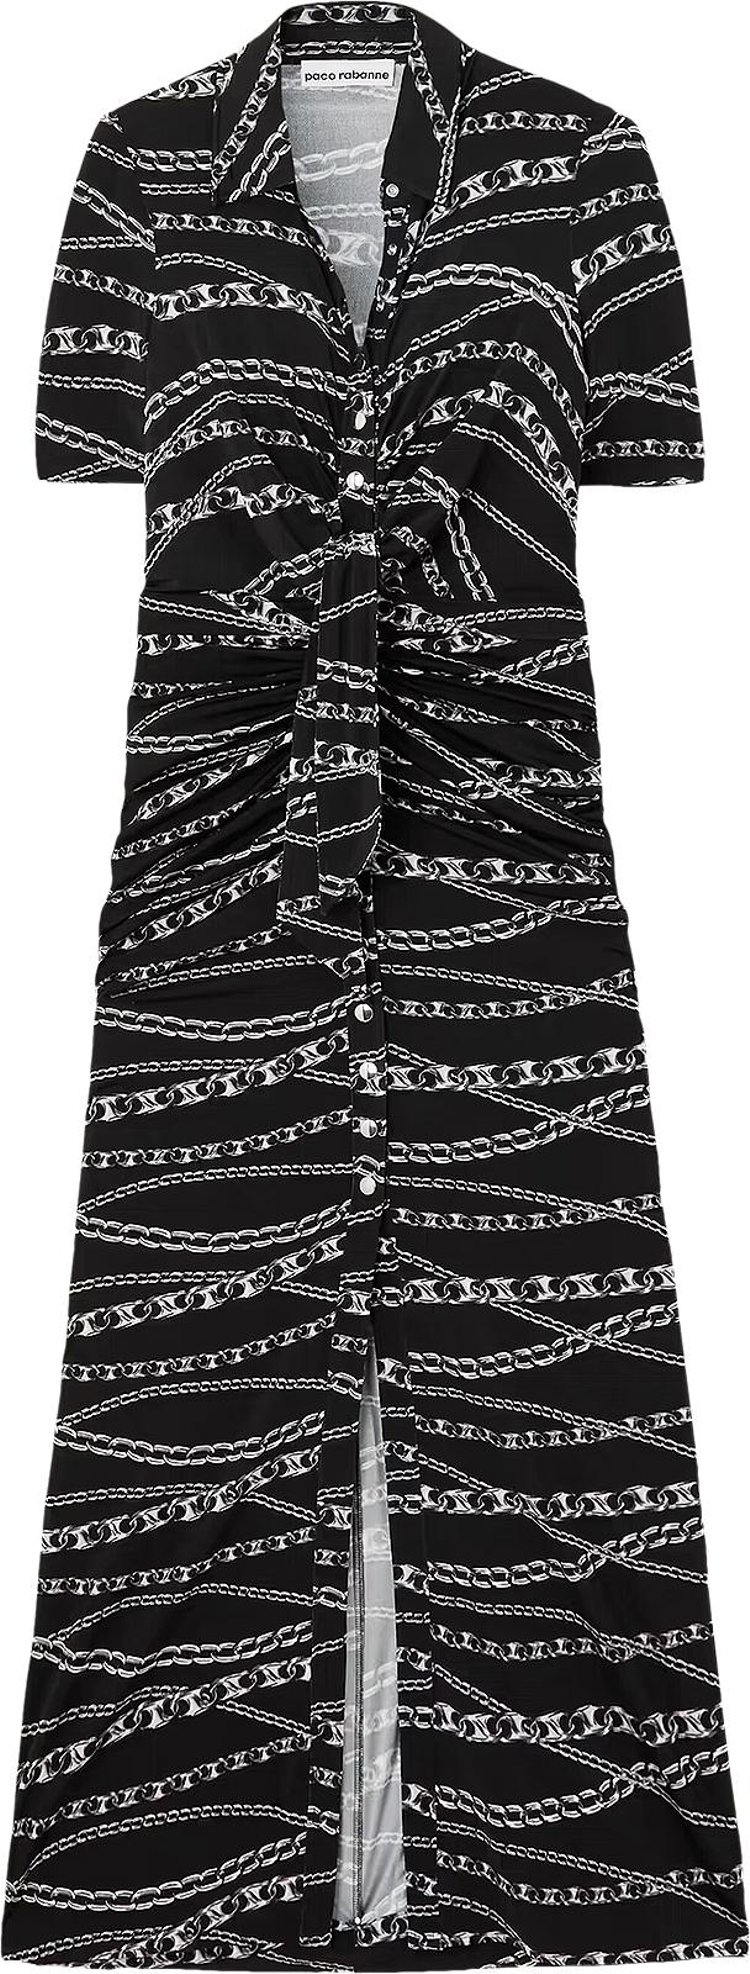 Paco Rabanne Chain Print Midi Skirt Dress 'Black/Silver Chain Print'